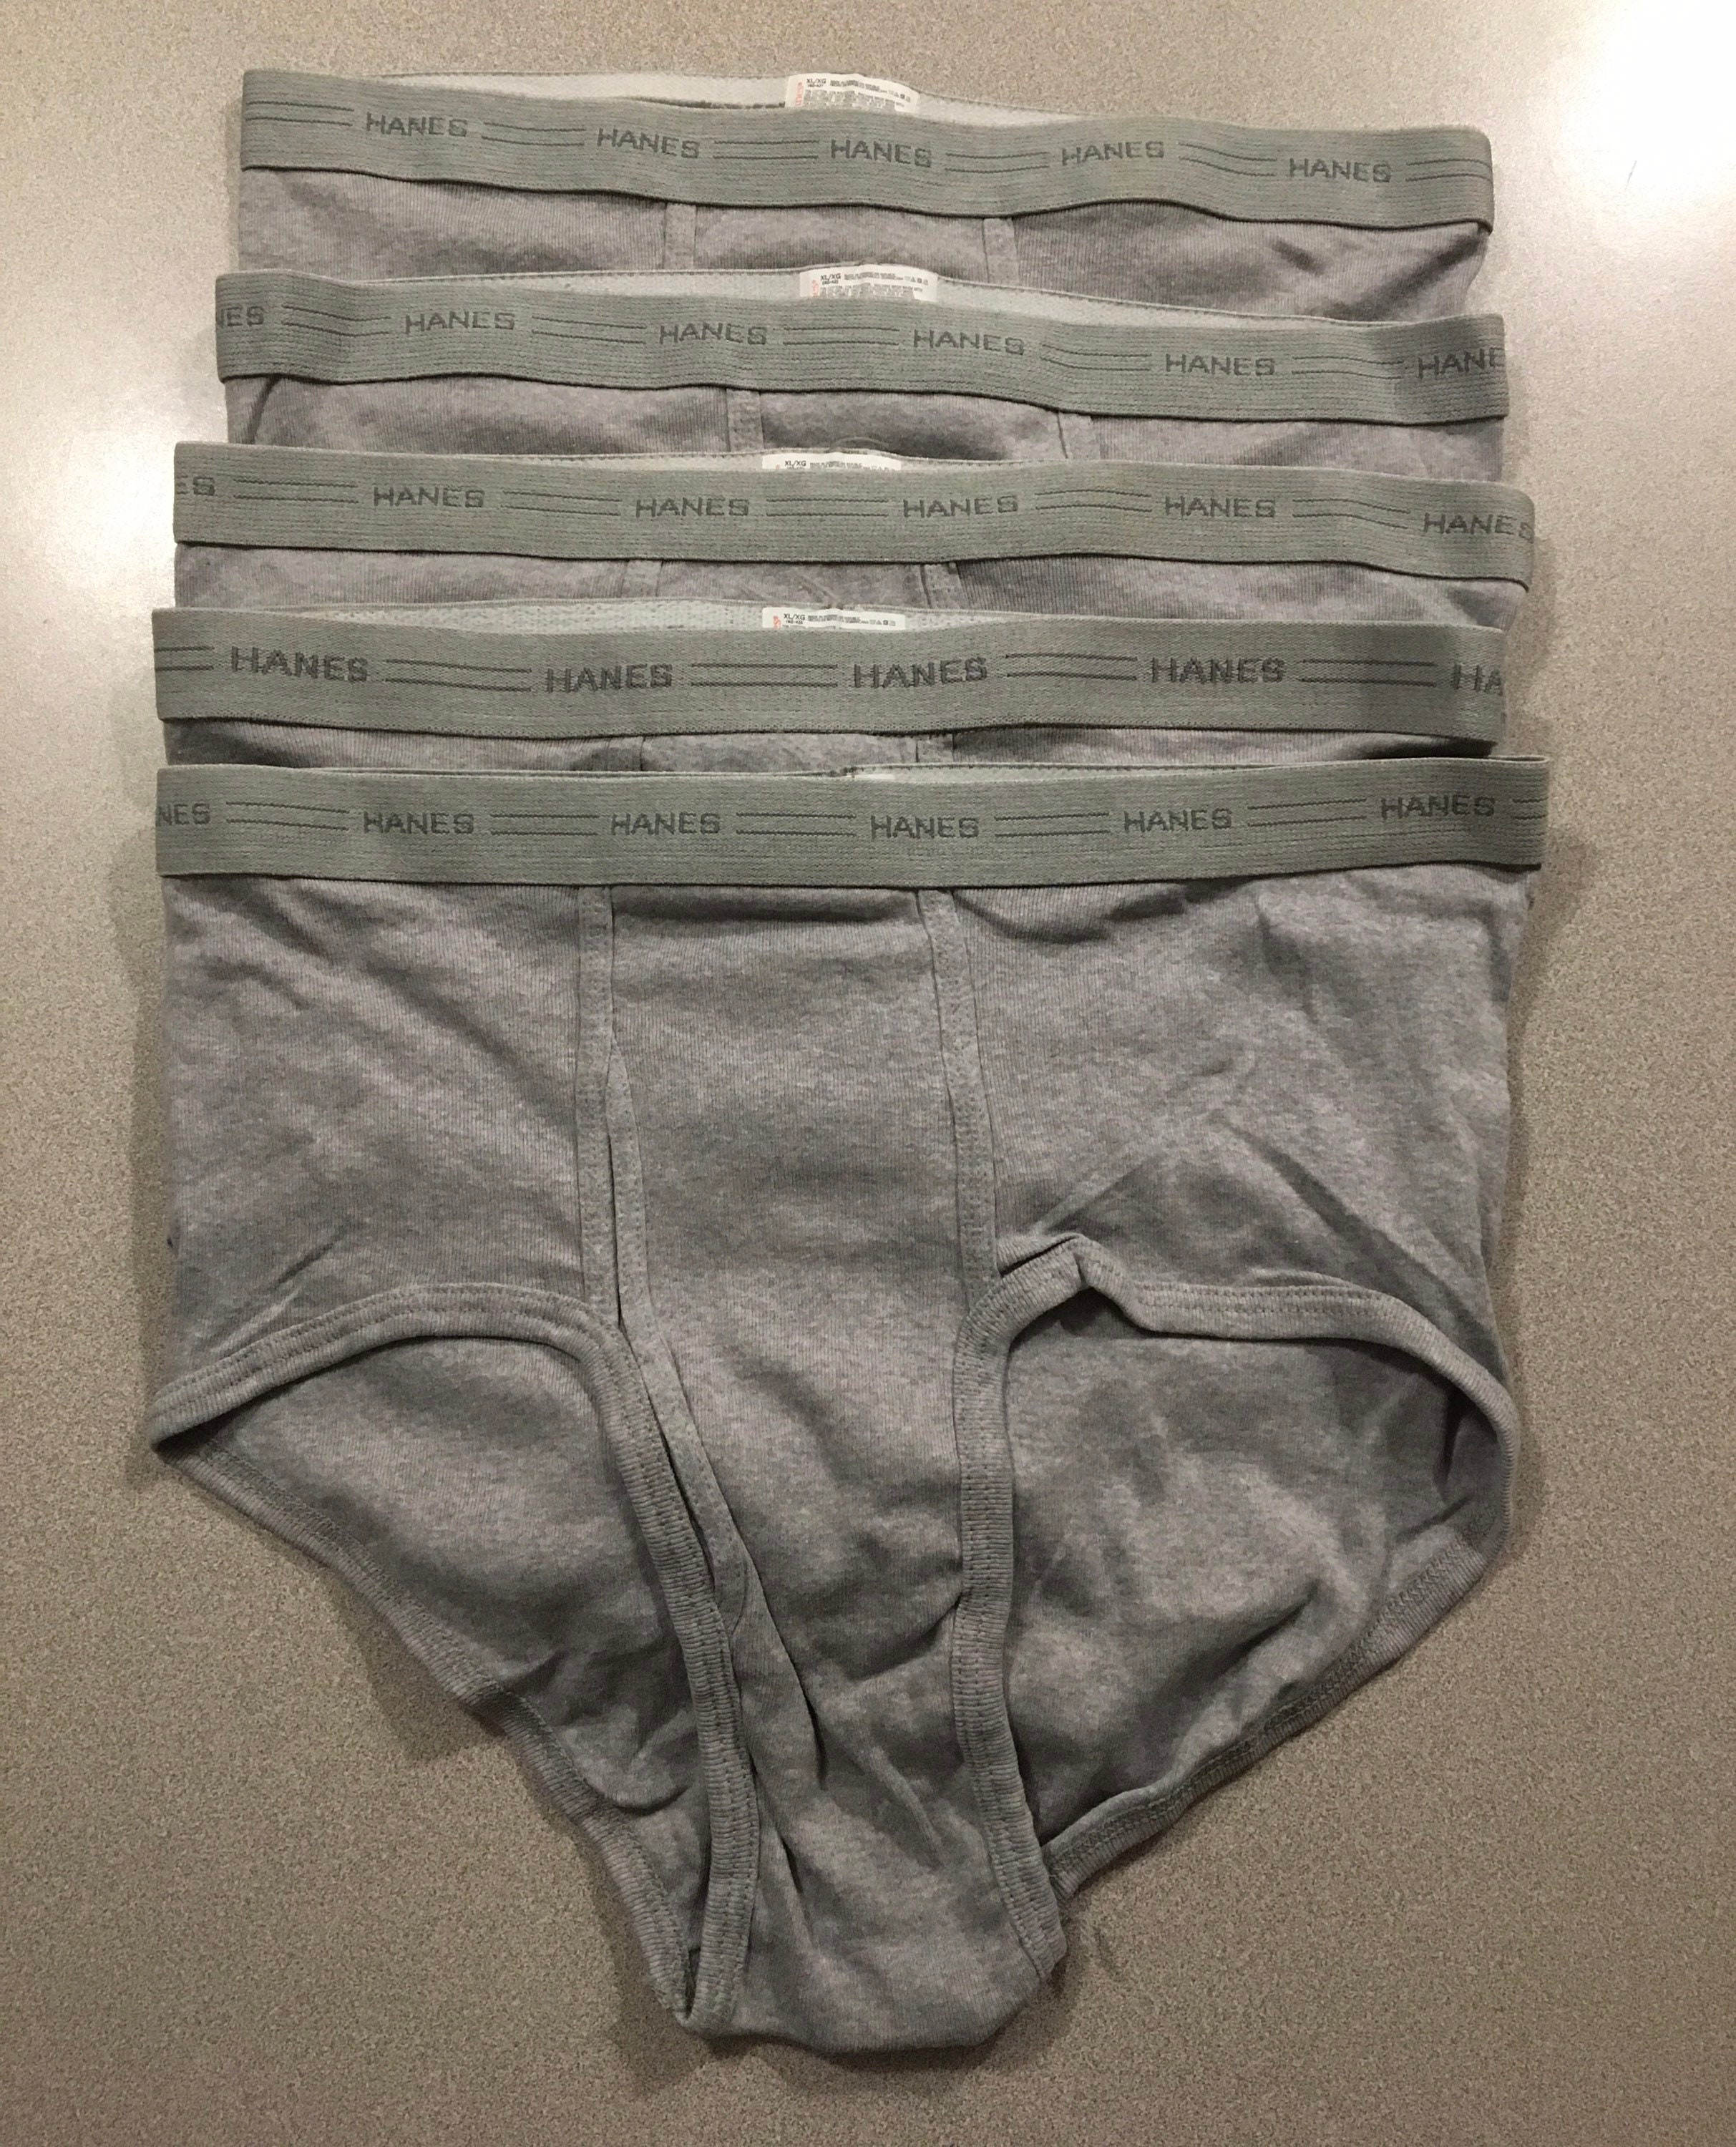 Vintage Hanes Briefs Polycotton Blend Underwear Gray Colored Mens Size XL  40-42 Lot of 5 